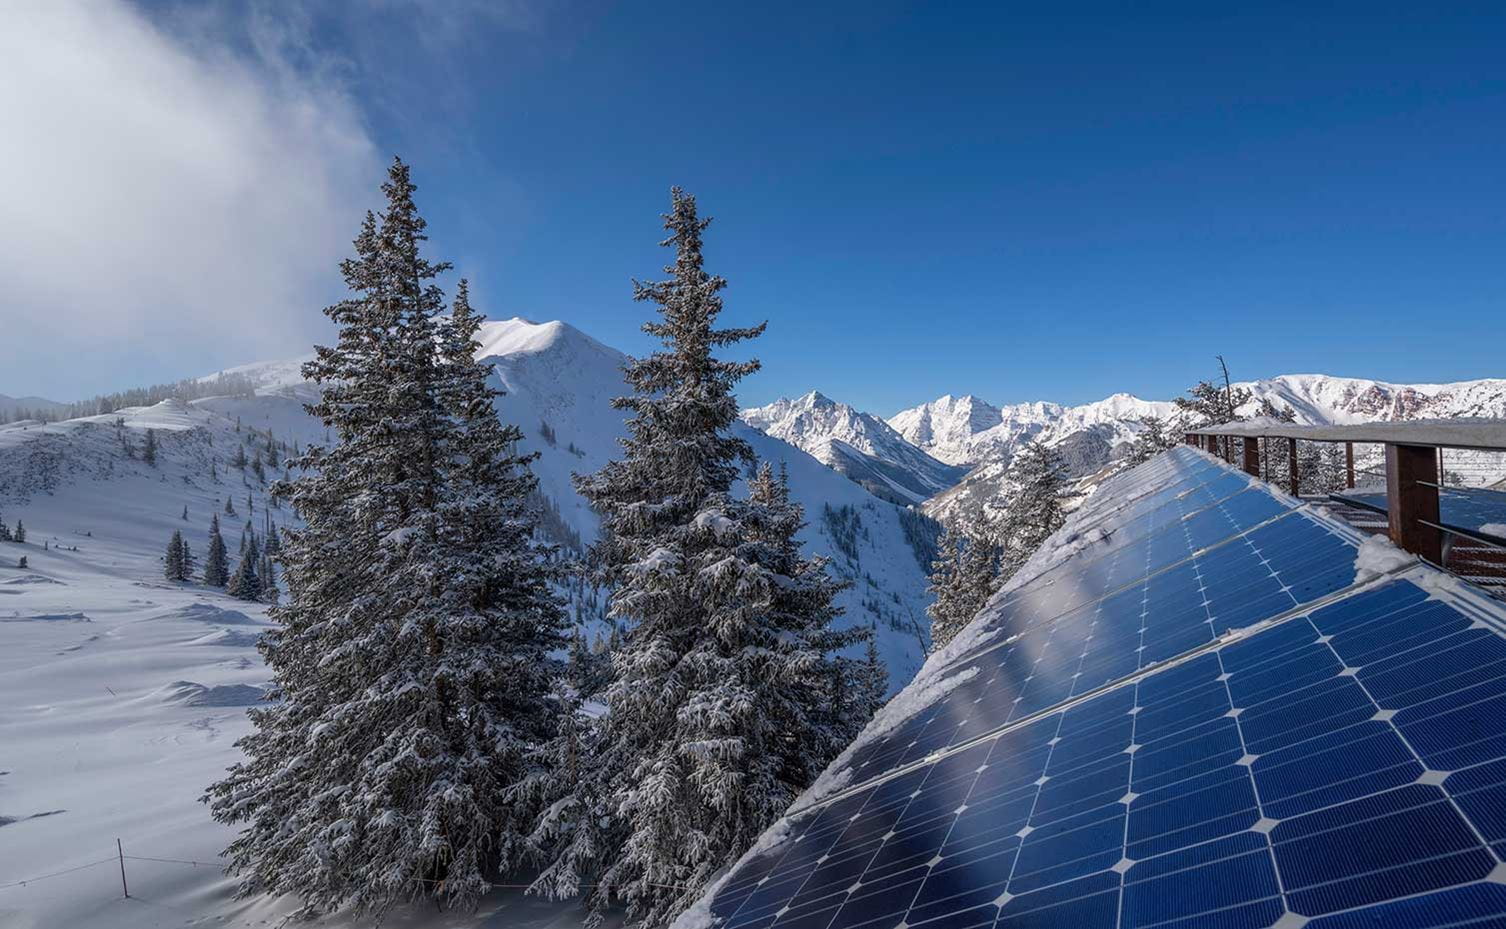 Solar panels at Aspen Highlands